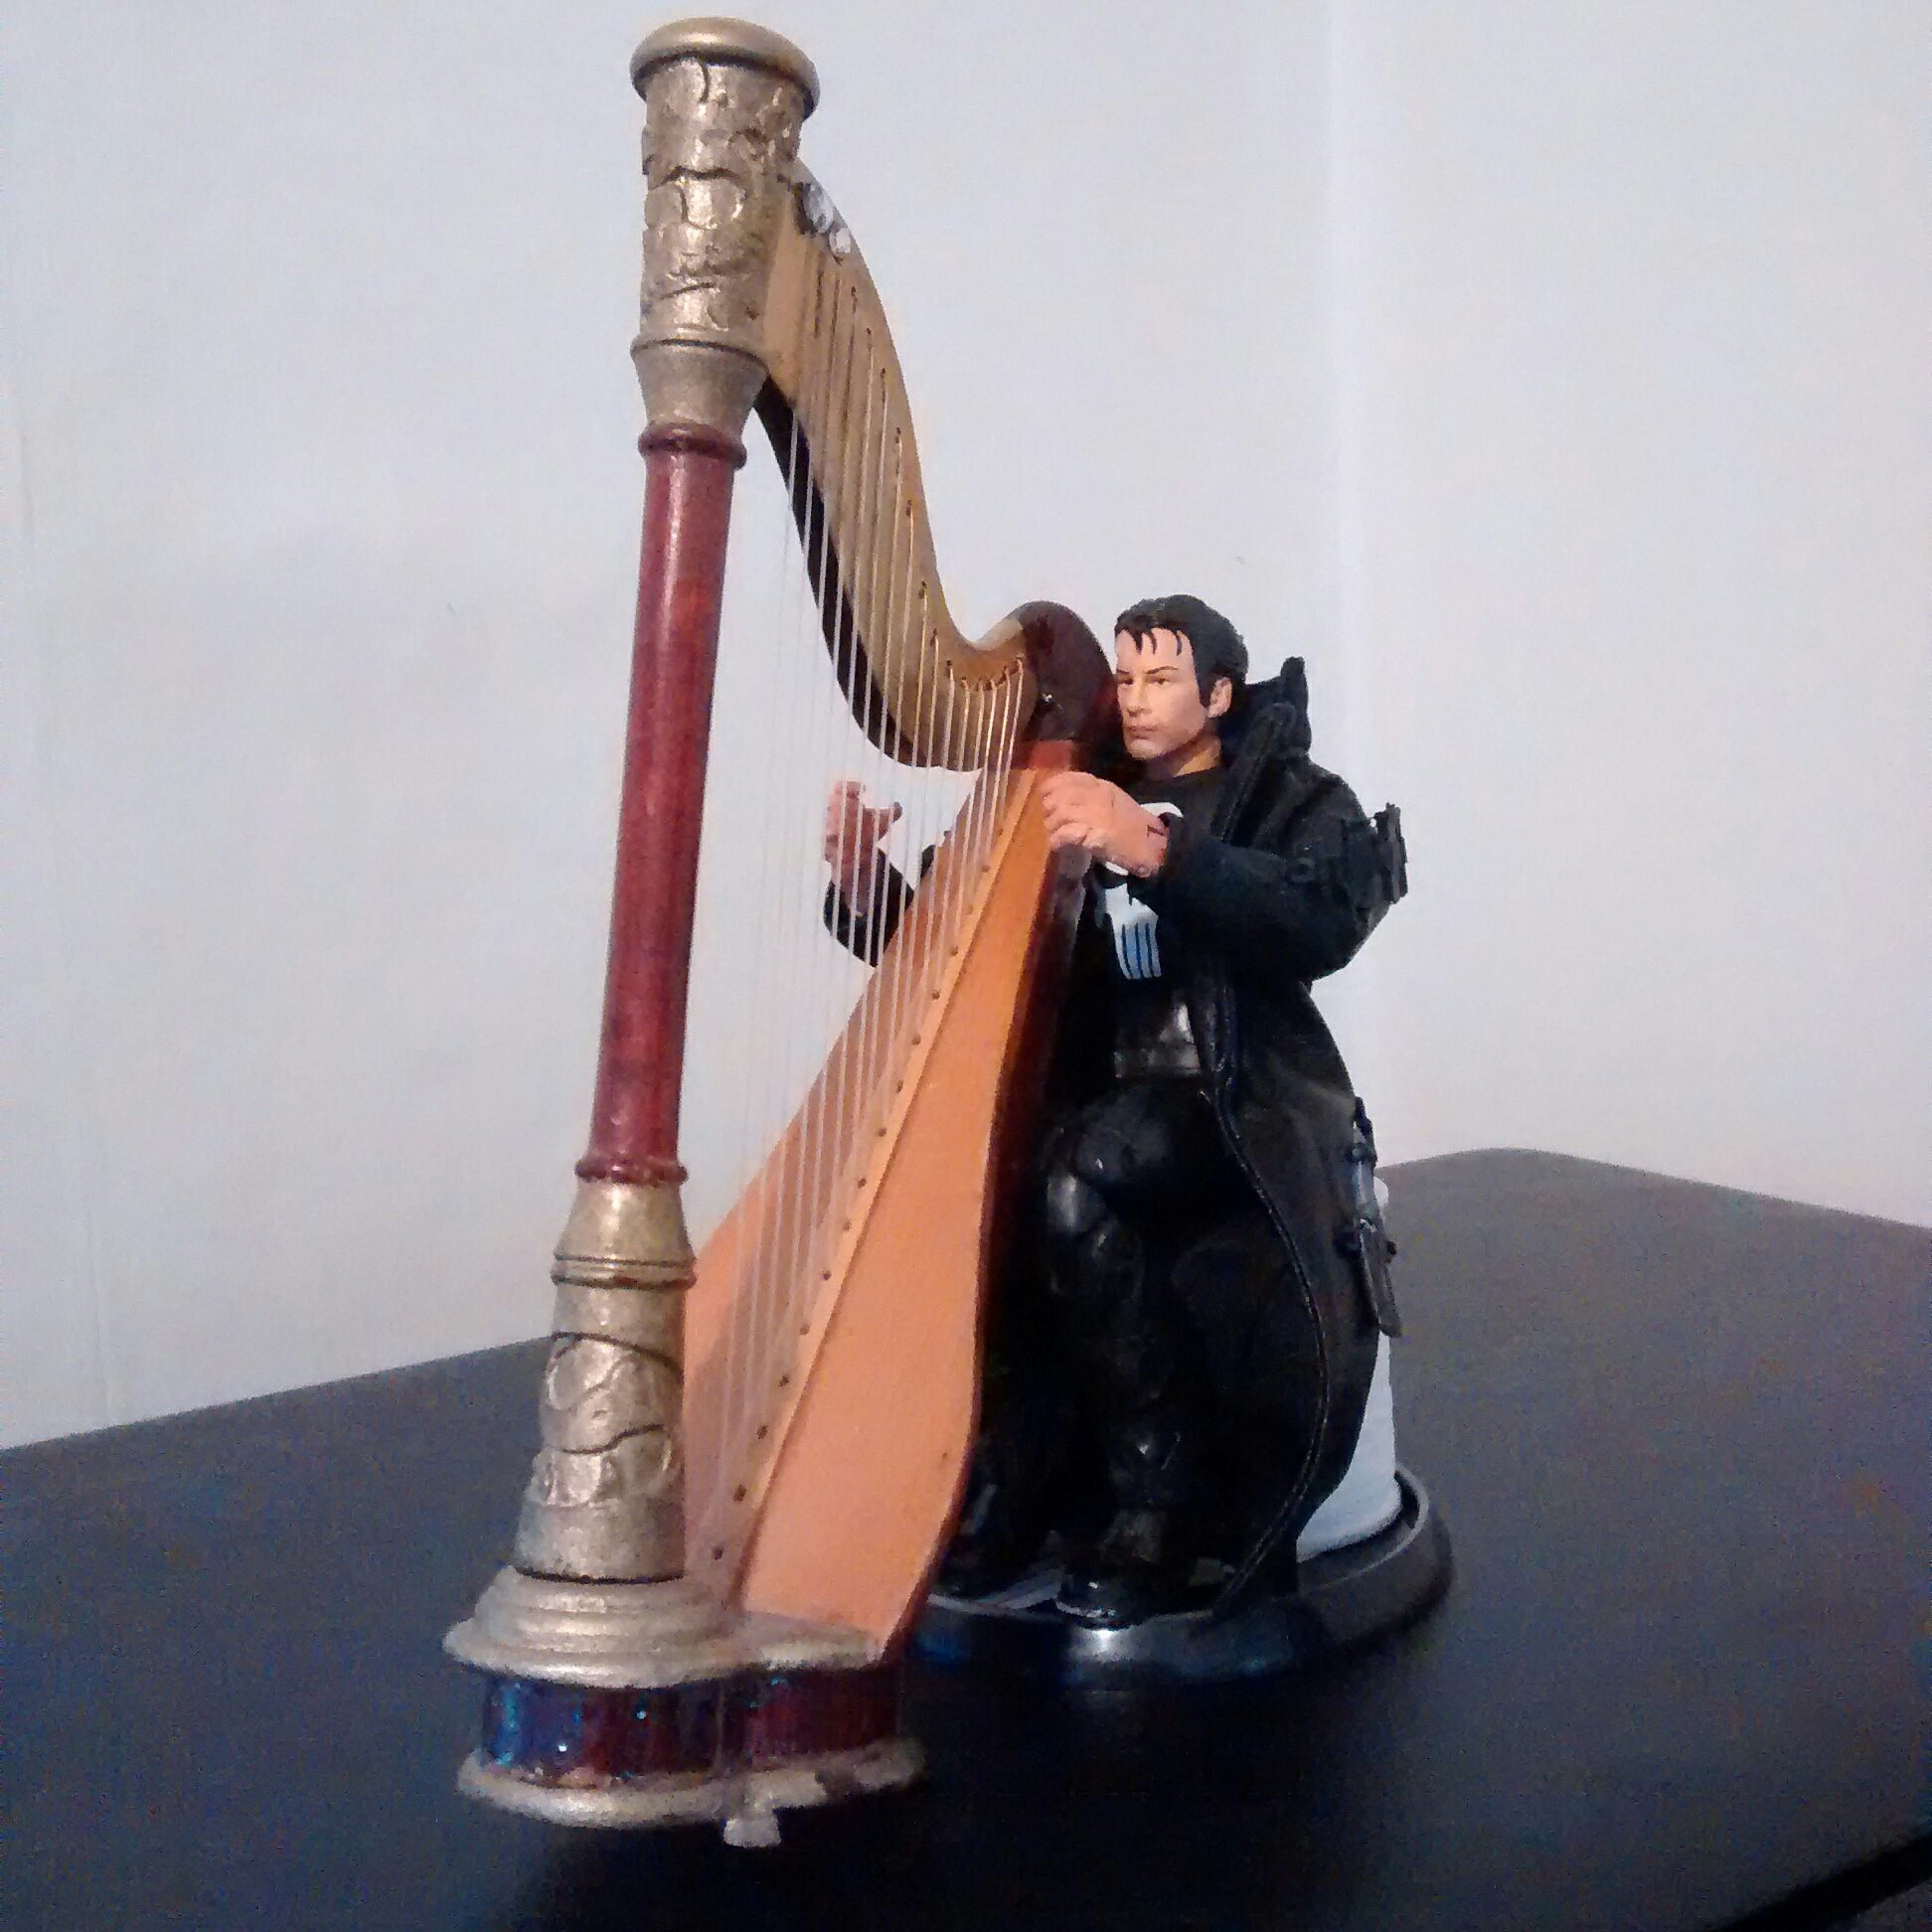 Thomas Jane, The Punisher, Practicing His Harp.